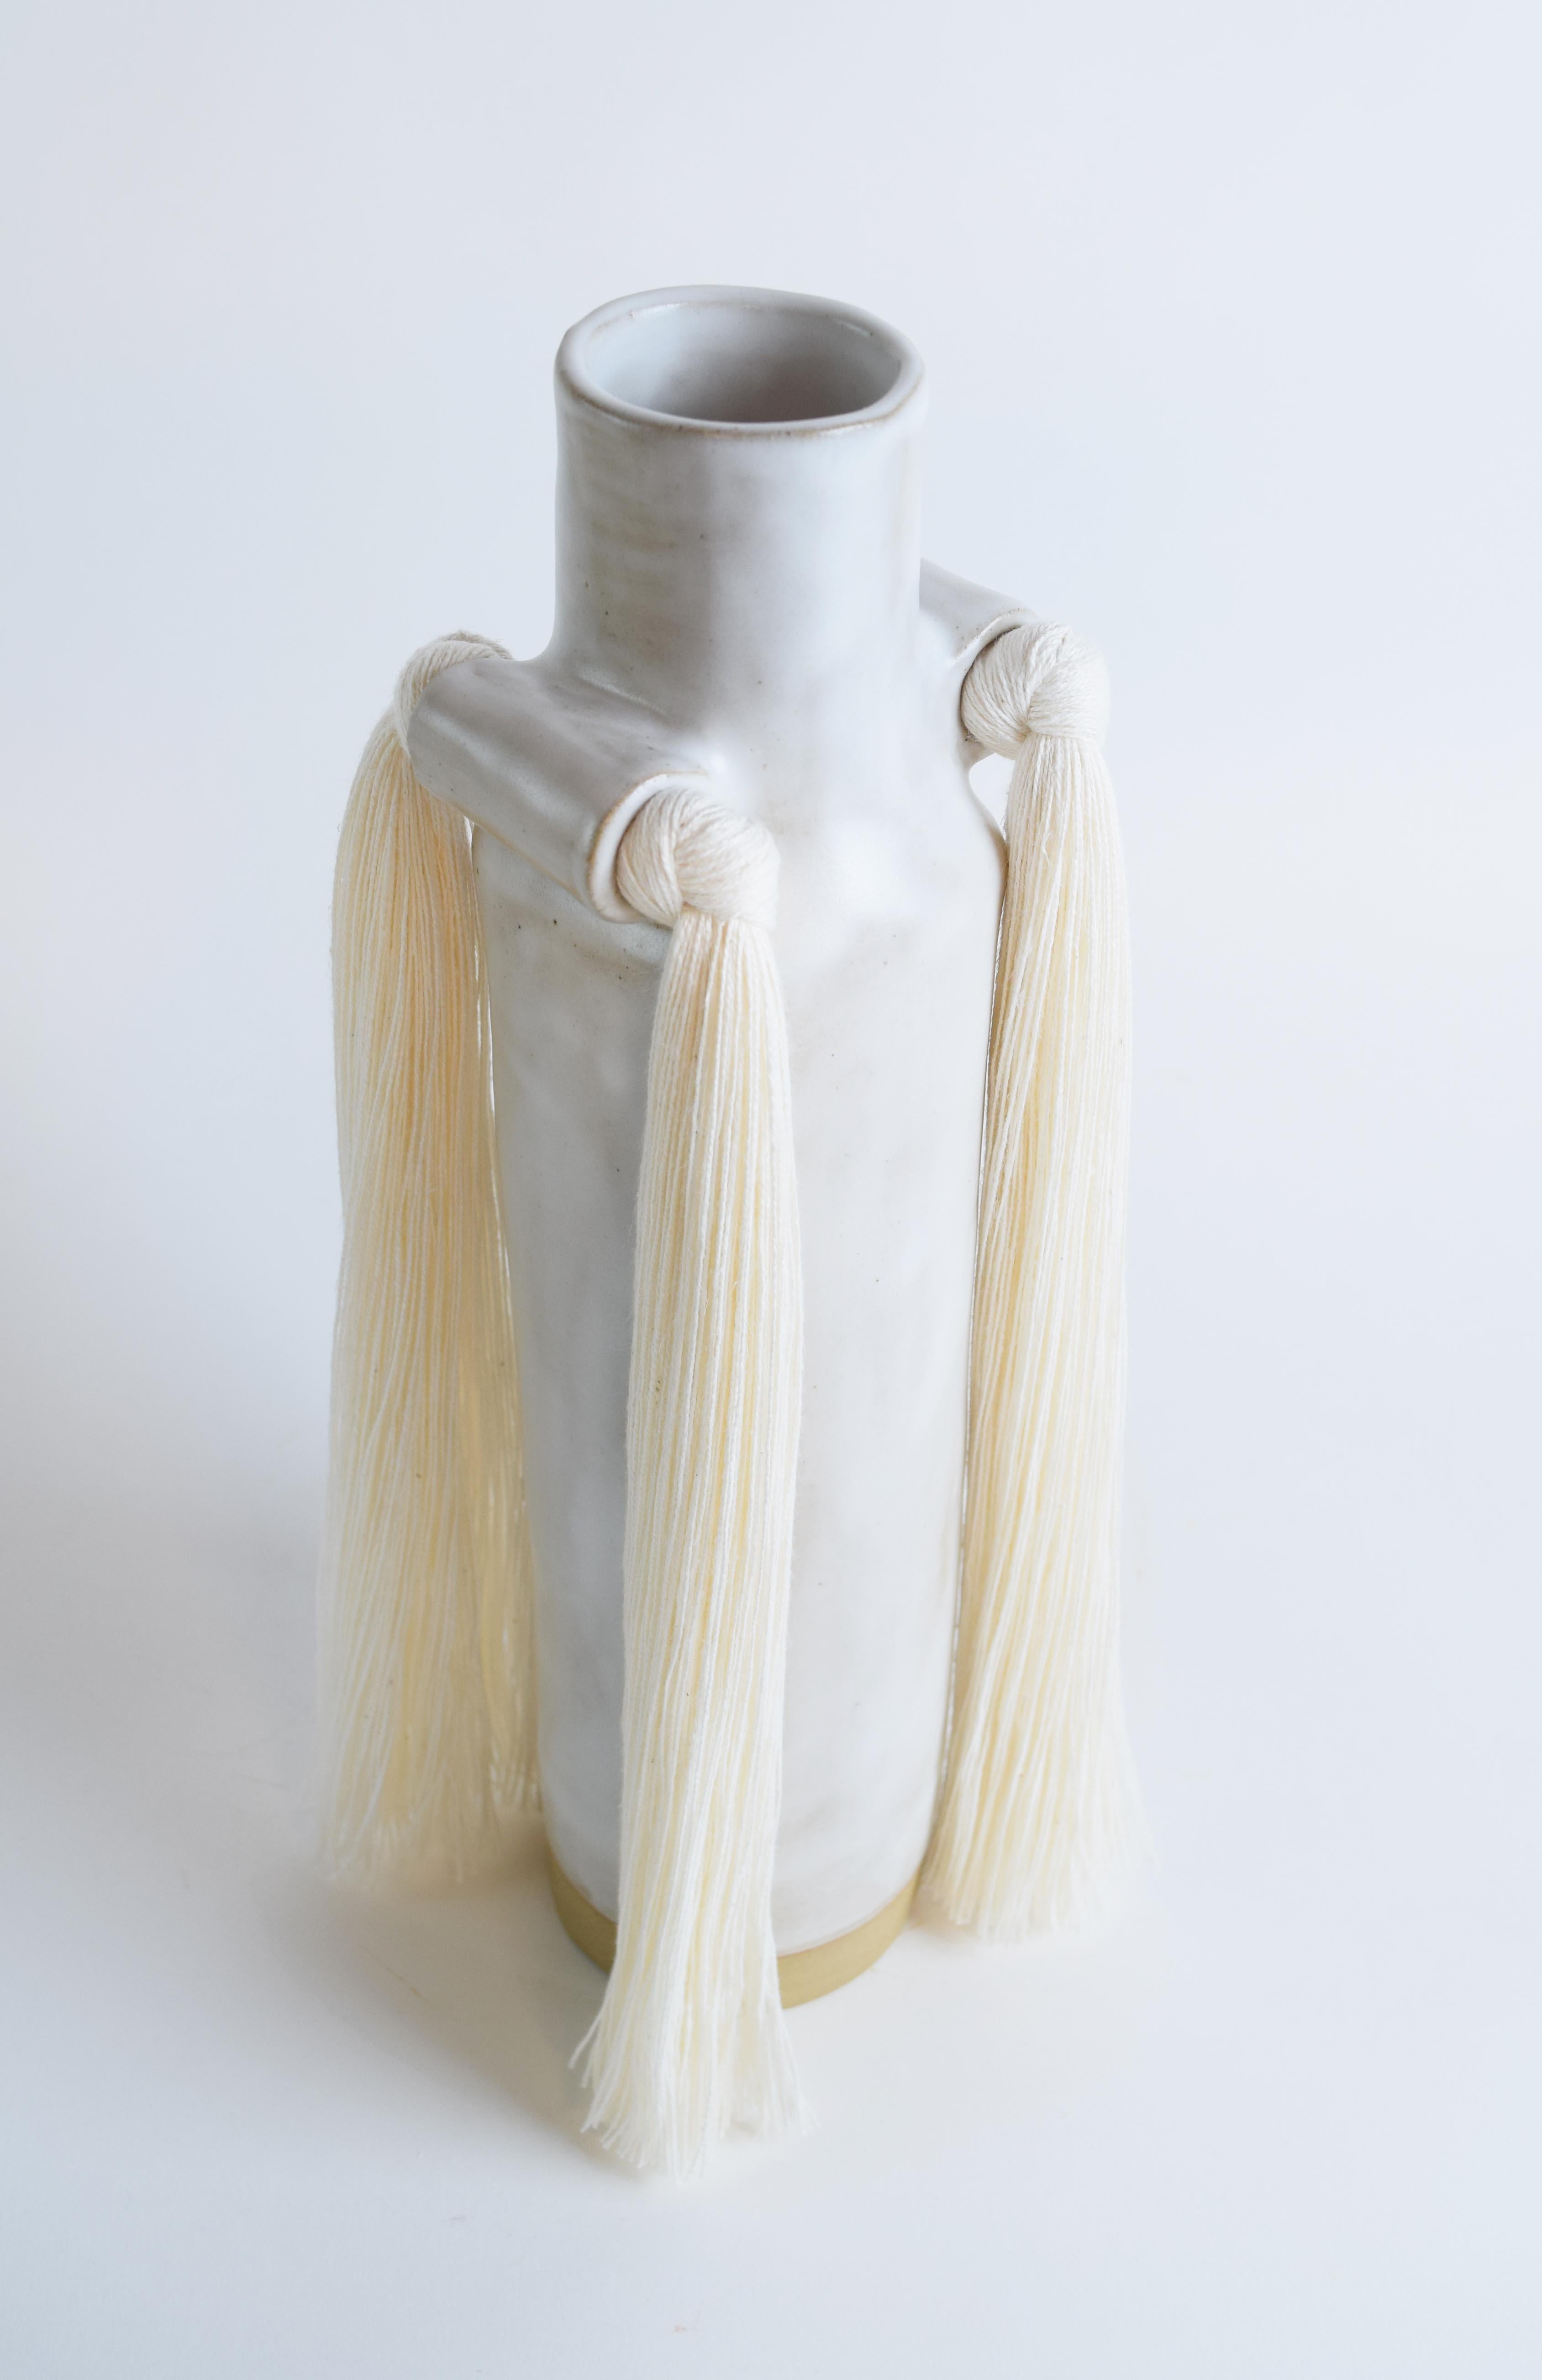 American Handmade Ceramic Vase #703 in Satin White Glaze with White Cotton Fringe For Sale